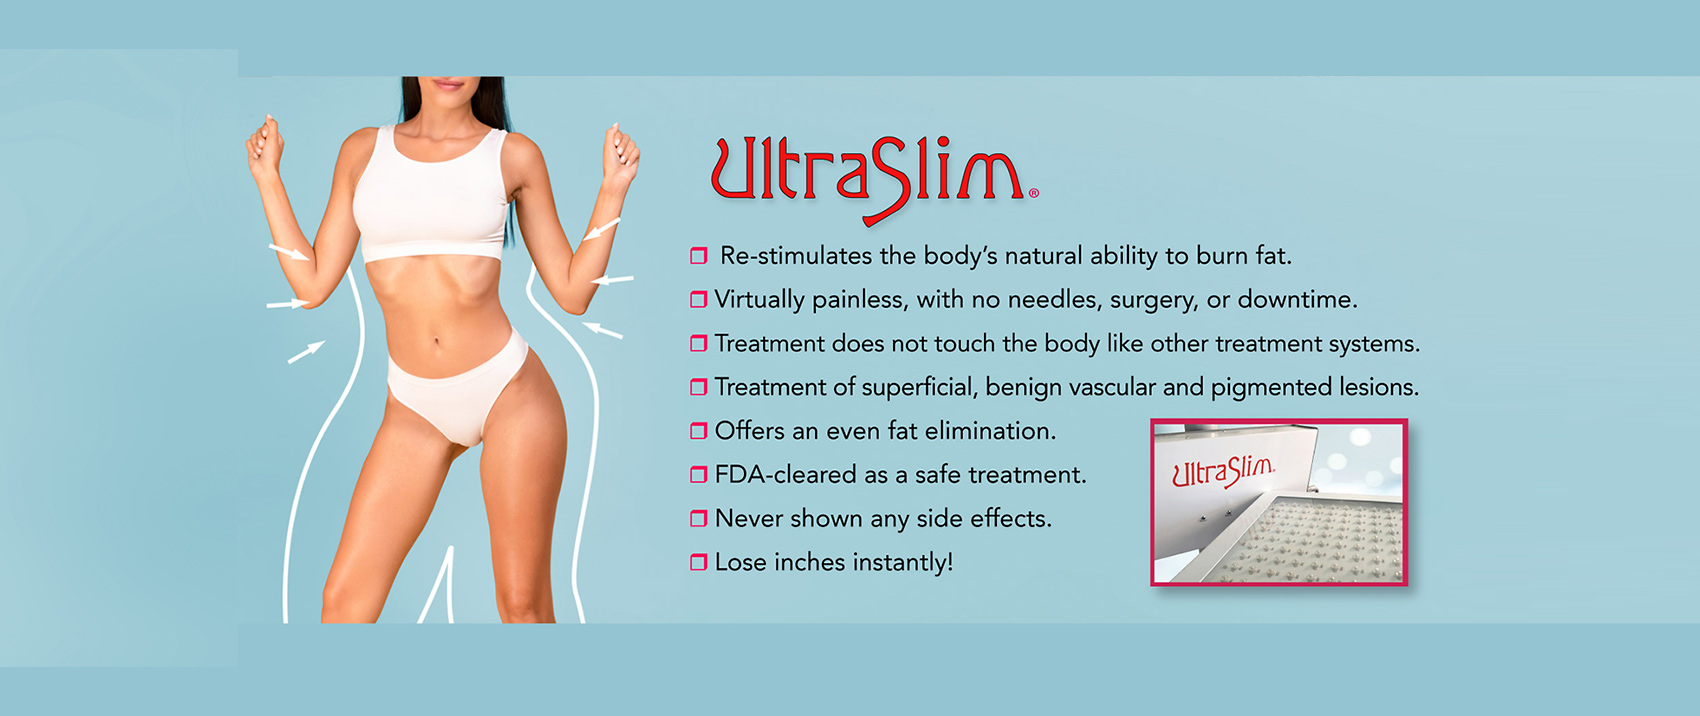 Ultrashape slimming weight loss machine - Buy Ultrashape slimming